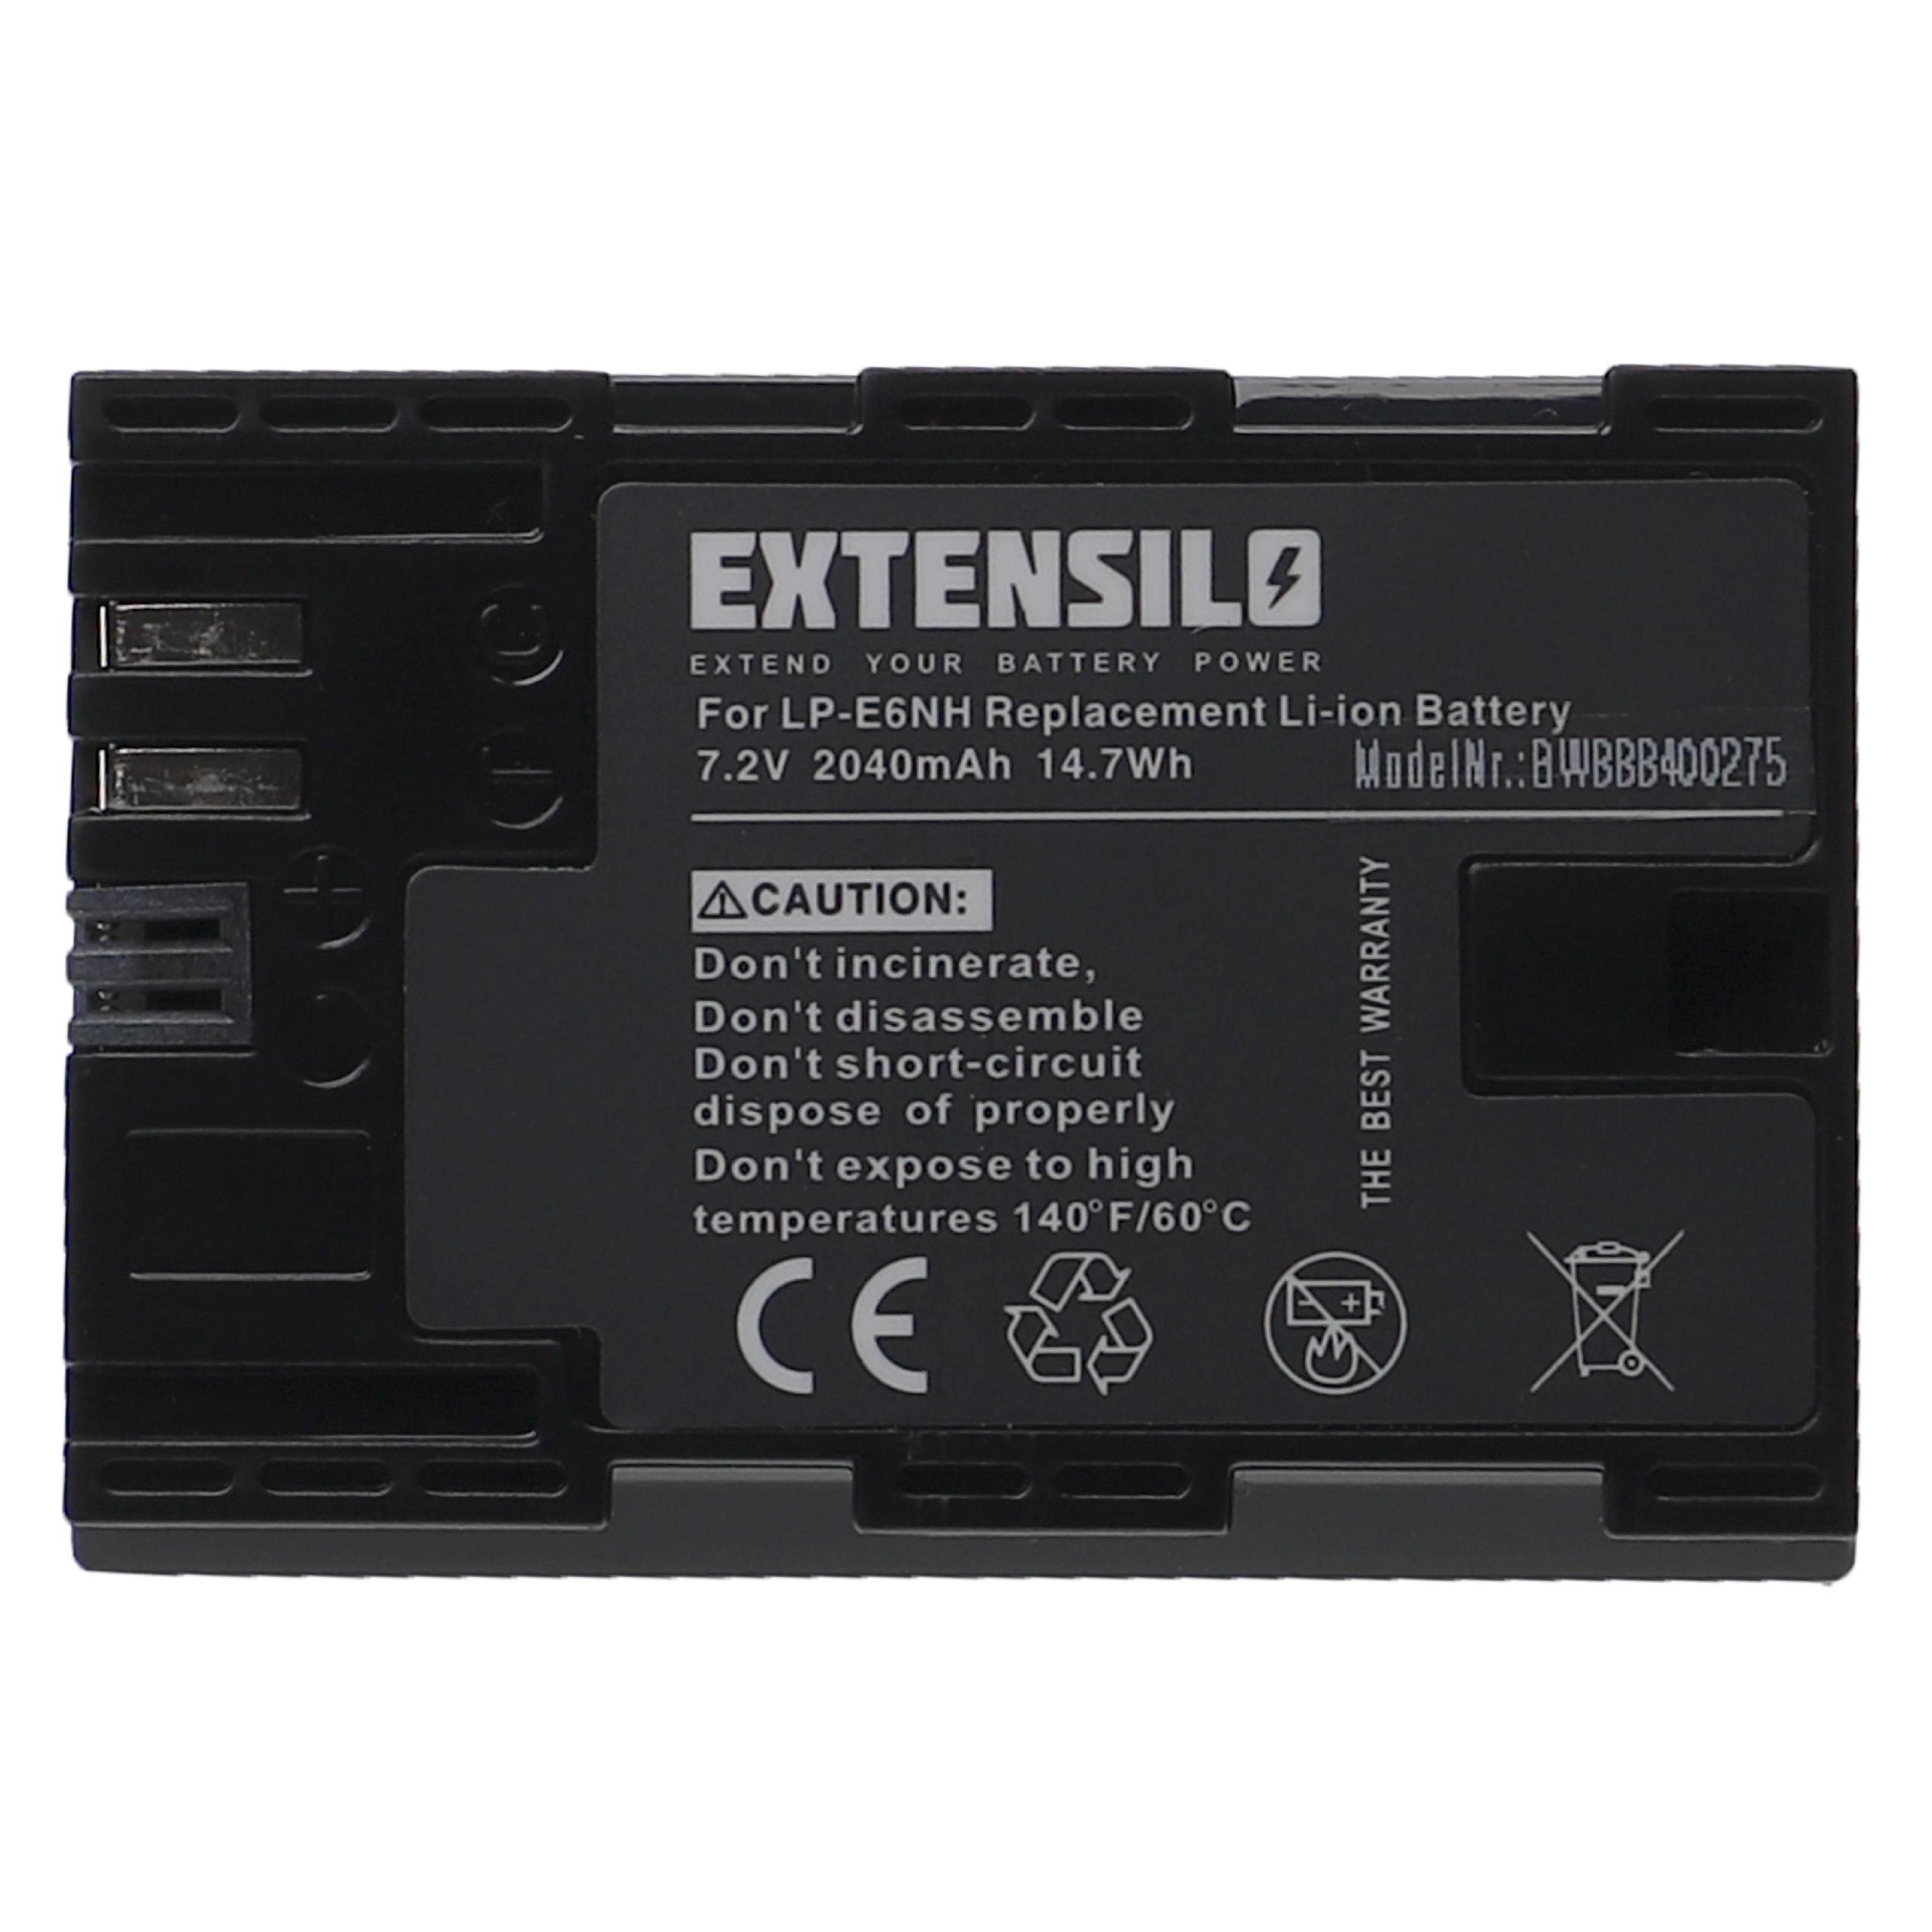 Battery Replacement for Canon LP-E6, LP-E6NH - 2040mAh, 7.2V, Li-Ion